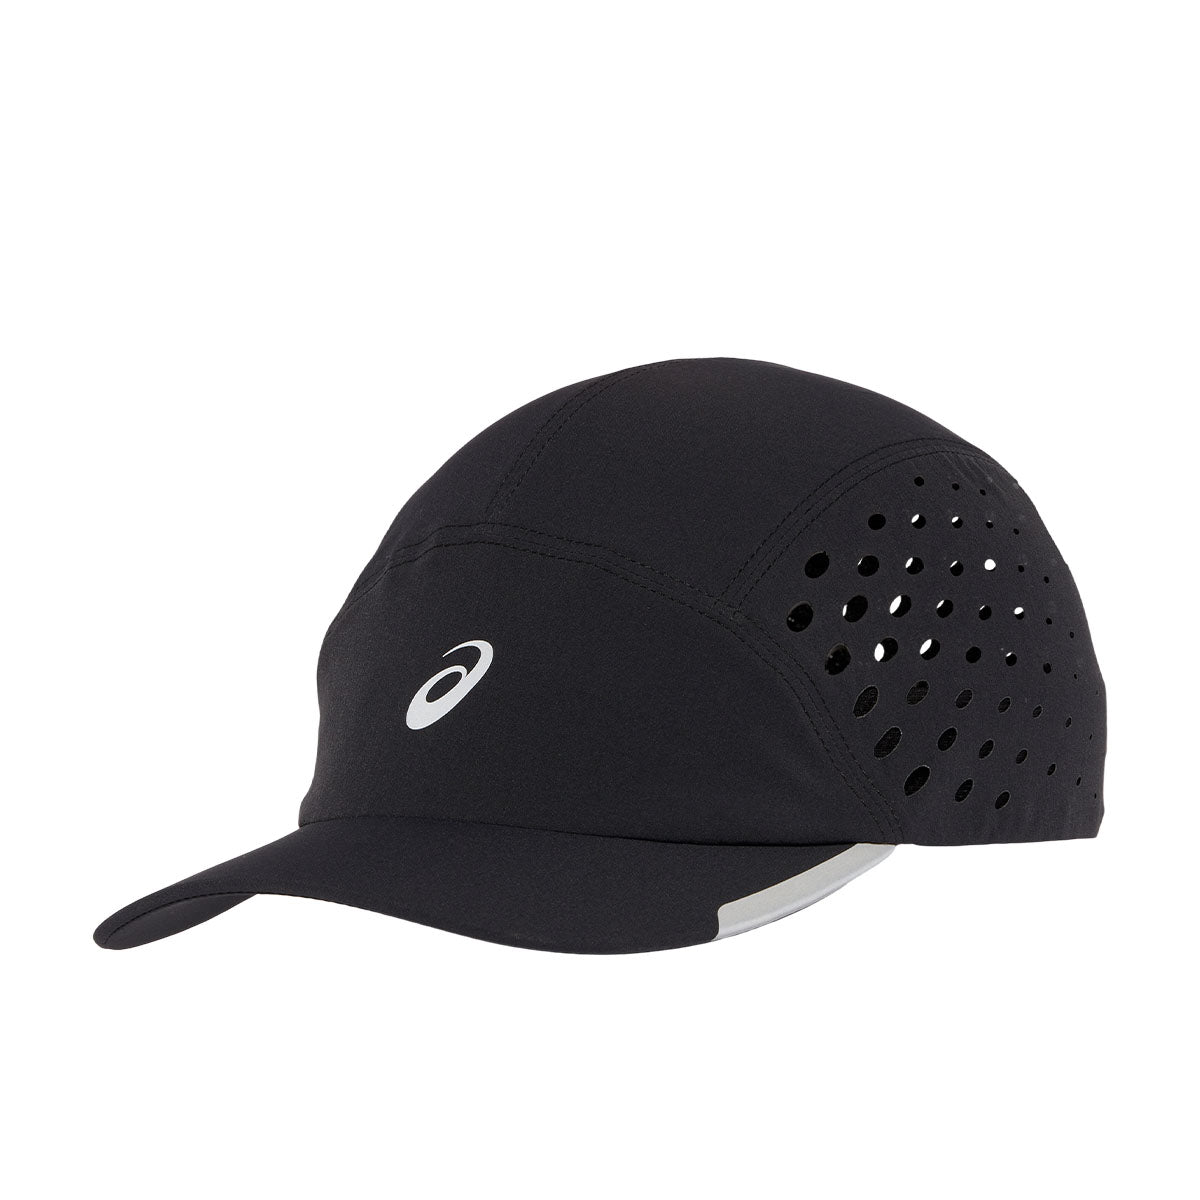 Asics Ultra Lightweight Running Cap Unisex Black כובע ריצה קל משקל